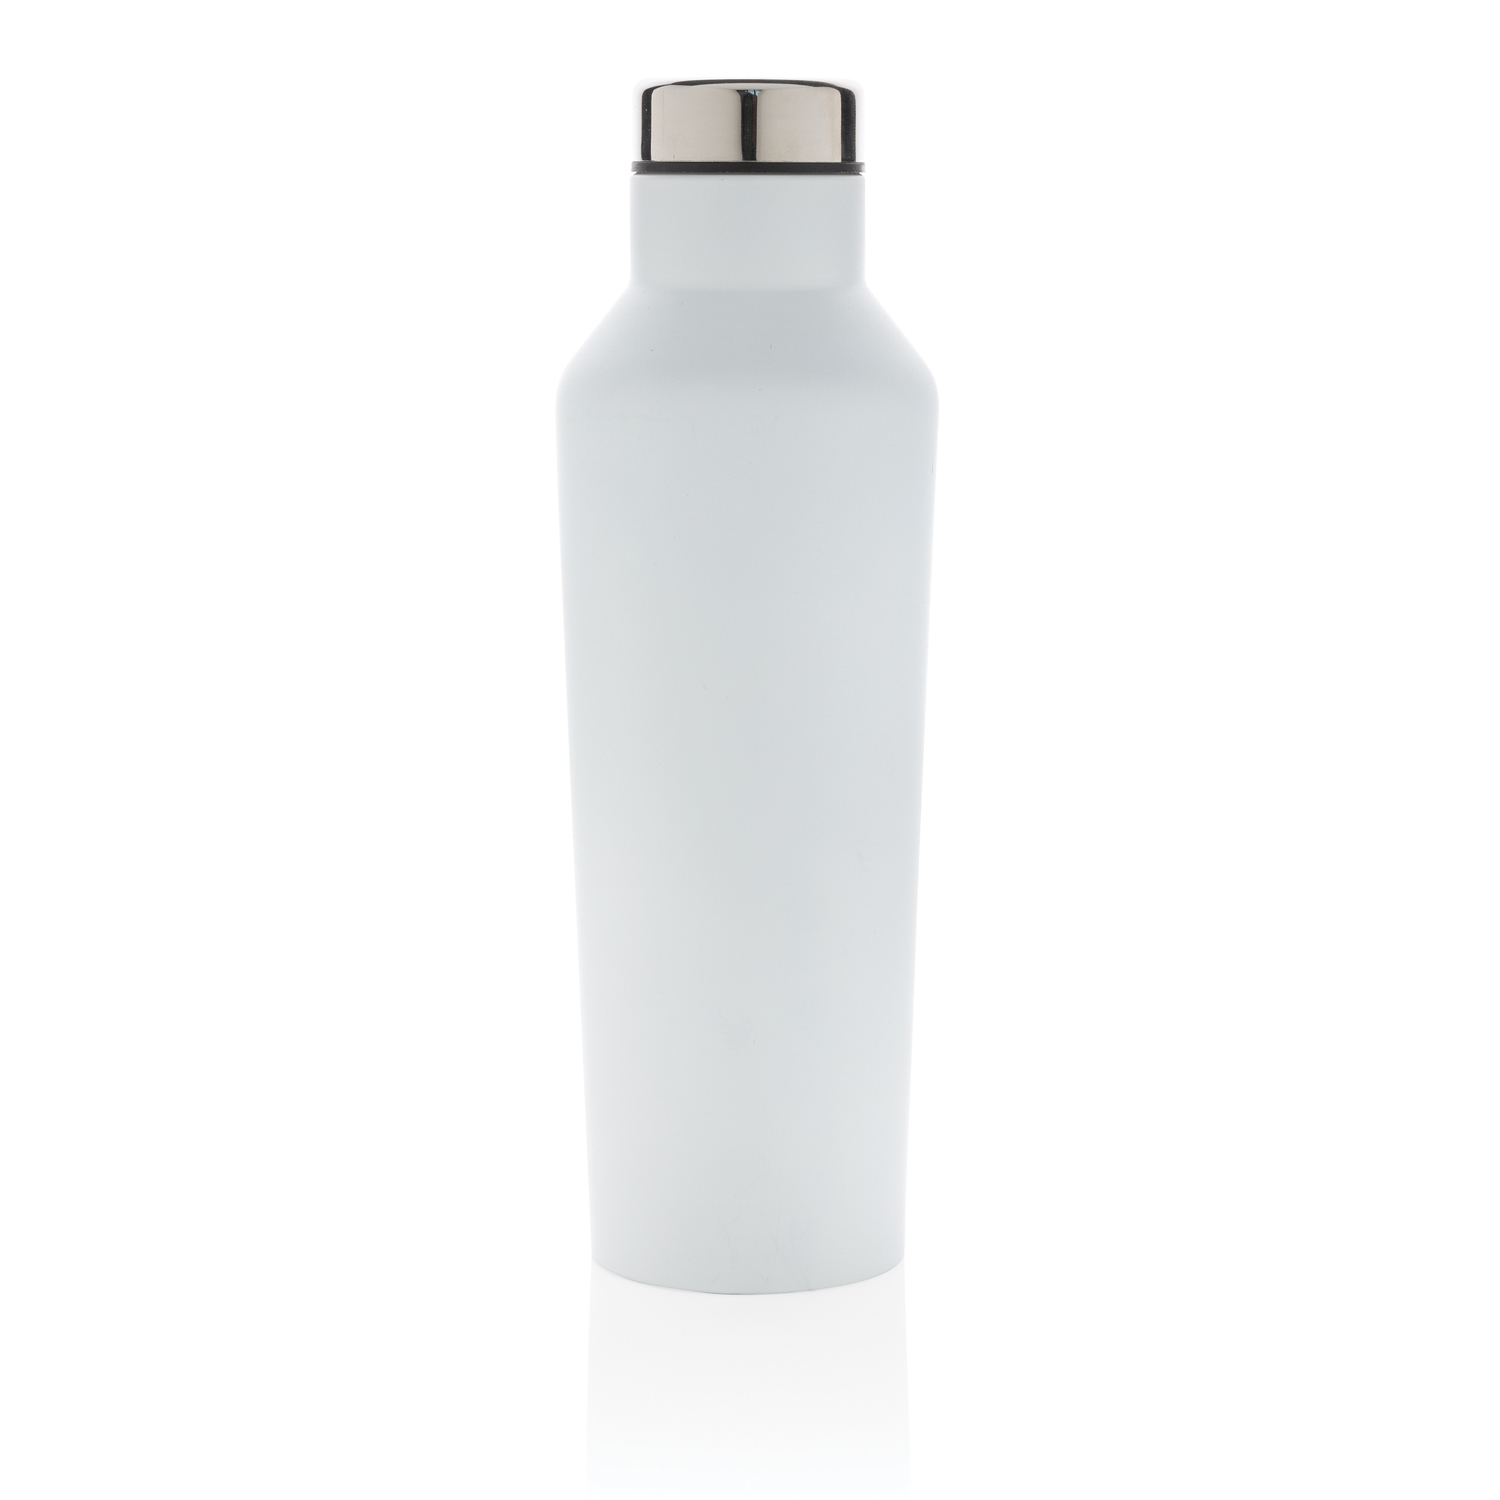 Вакуумная бутылка для воды Modern из нержавеющей стали, 500 мл, белый, нержавеющая сталь; pp